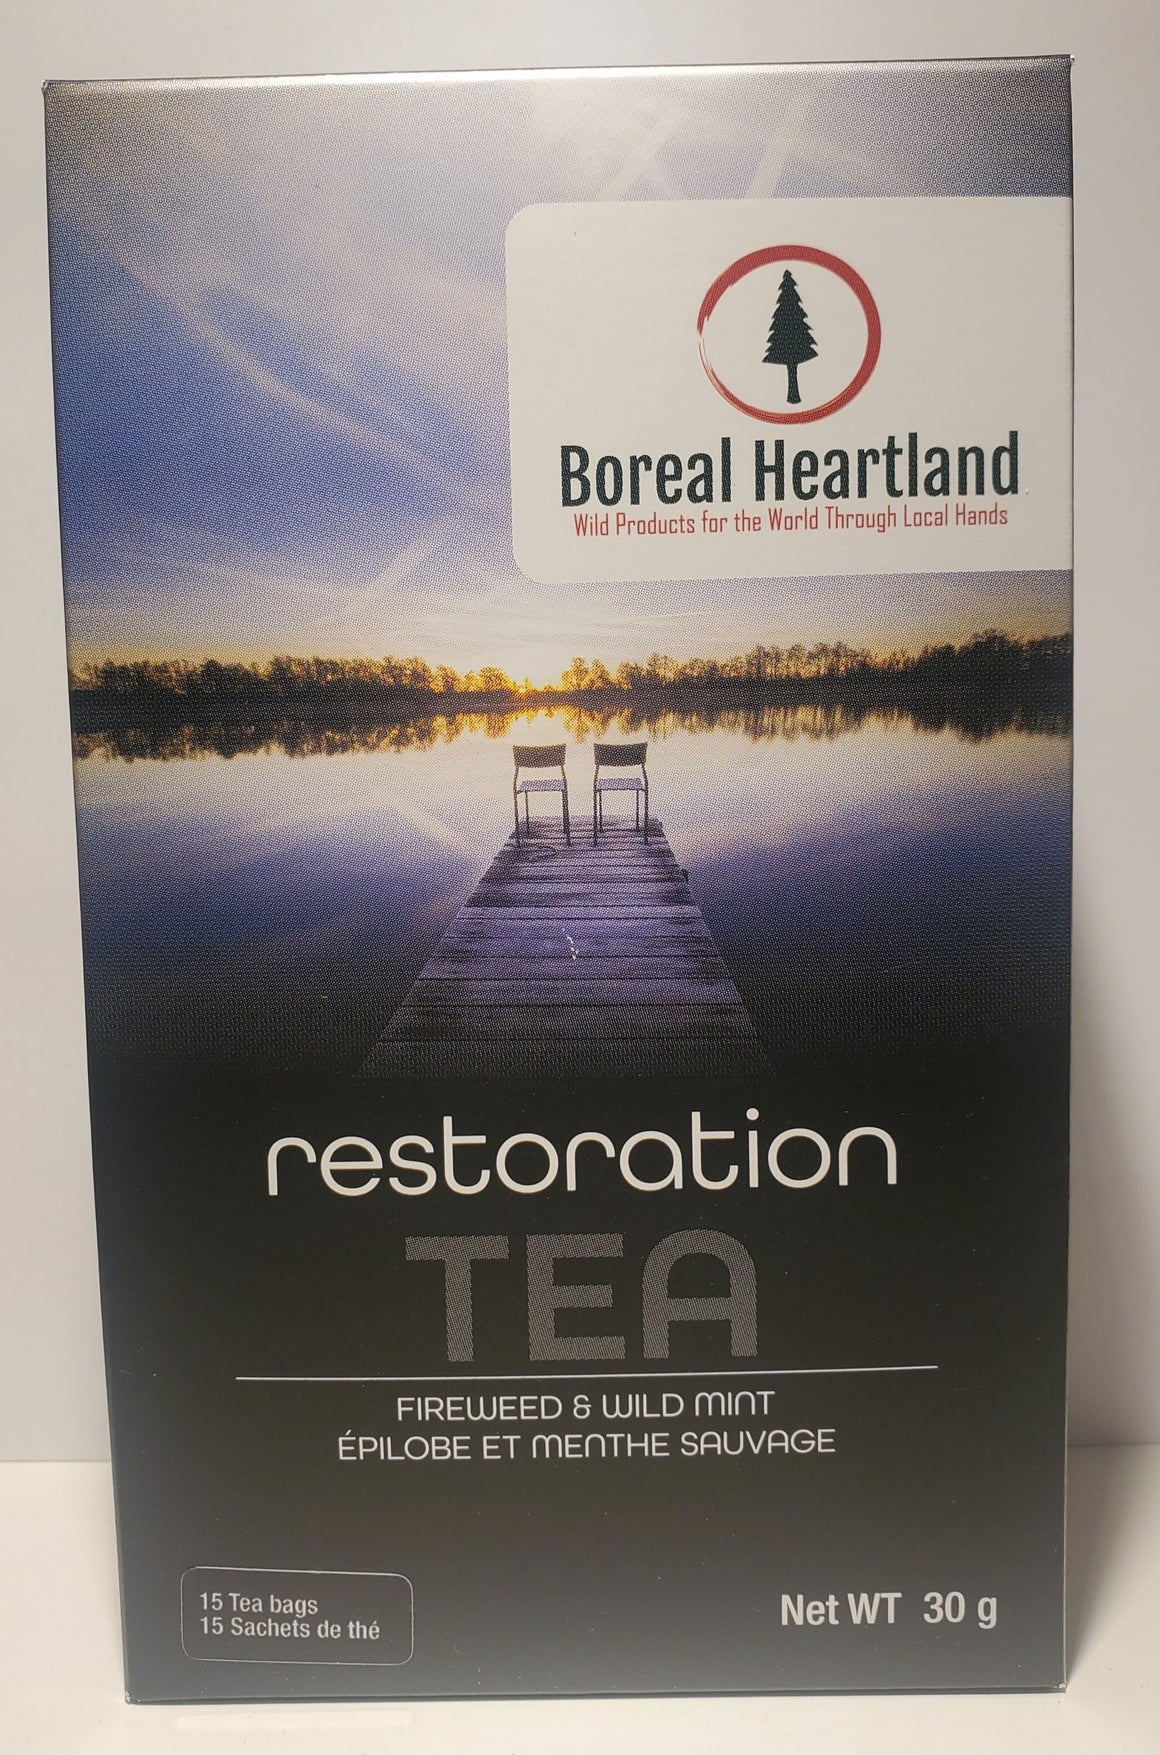 Boreal Heartland Restoration Tea